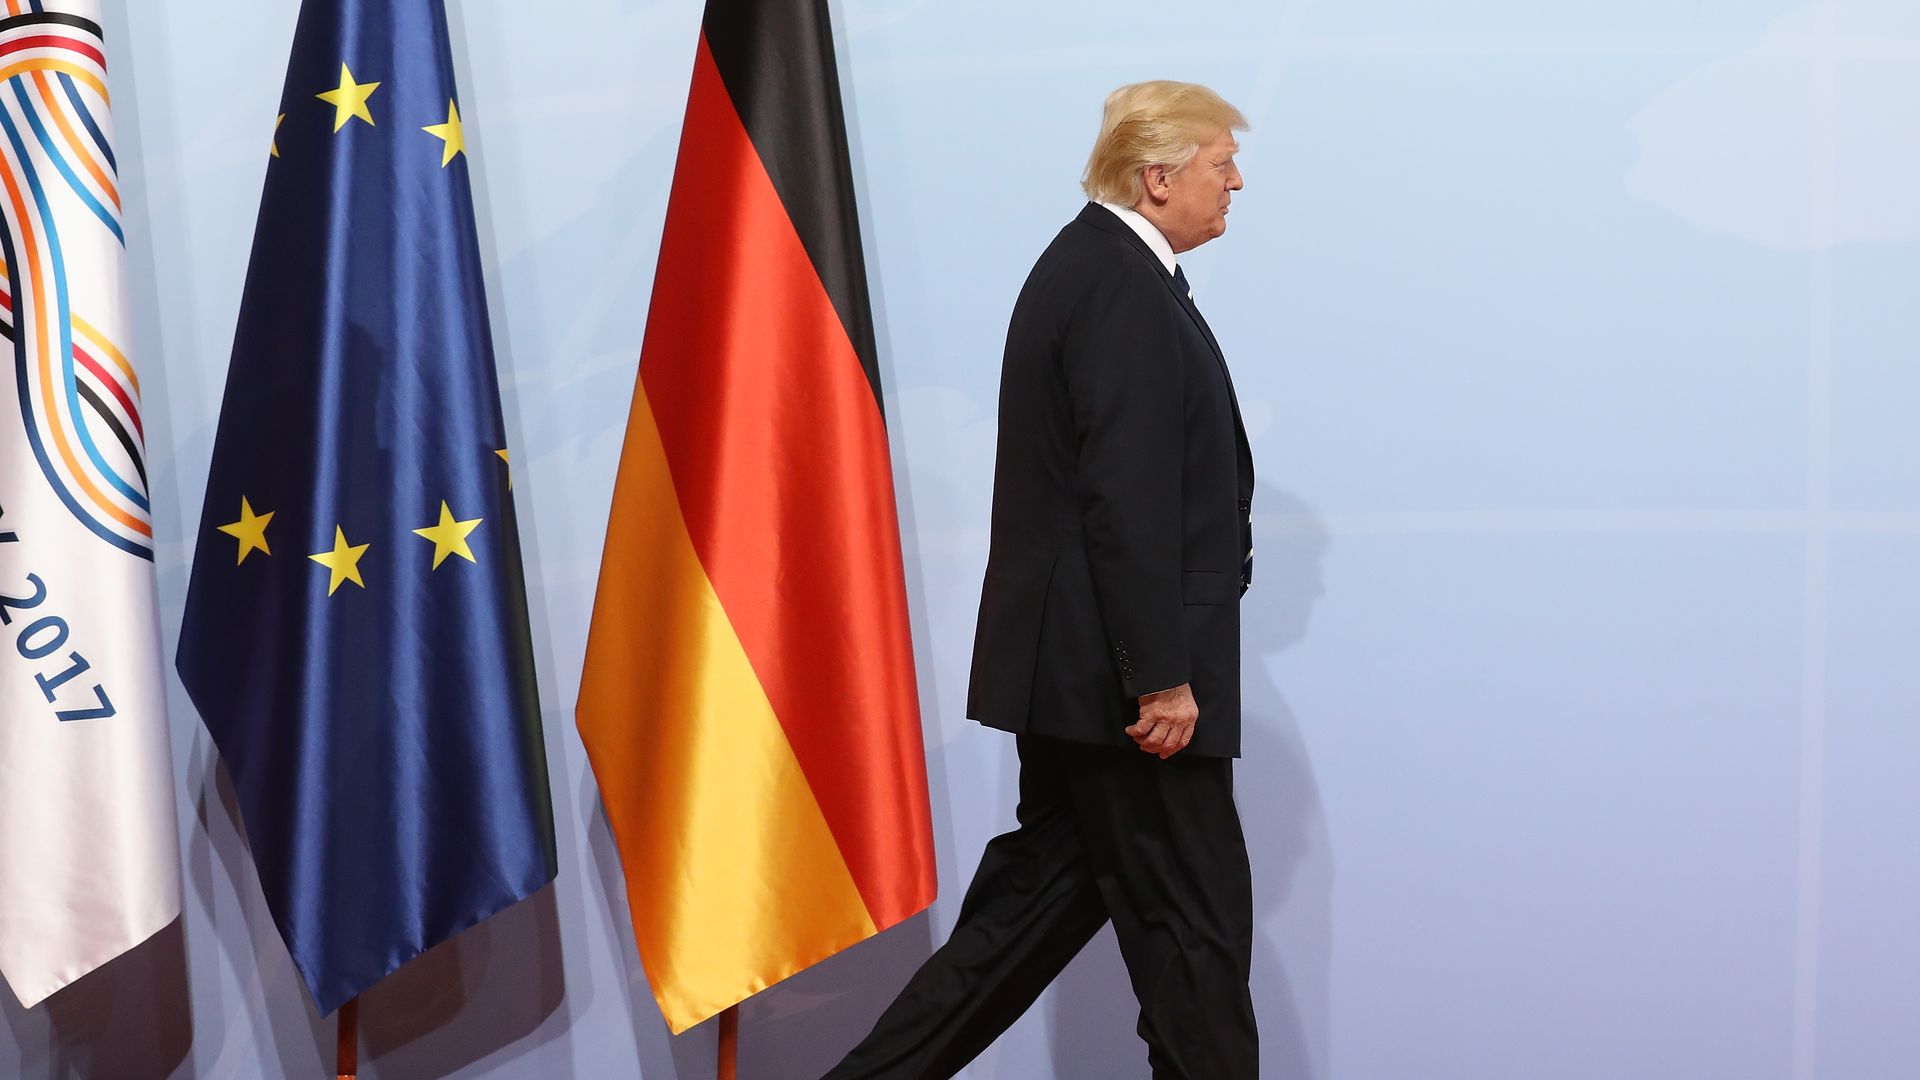 Trump walks past the German and EU flags